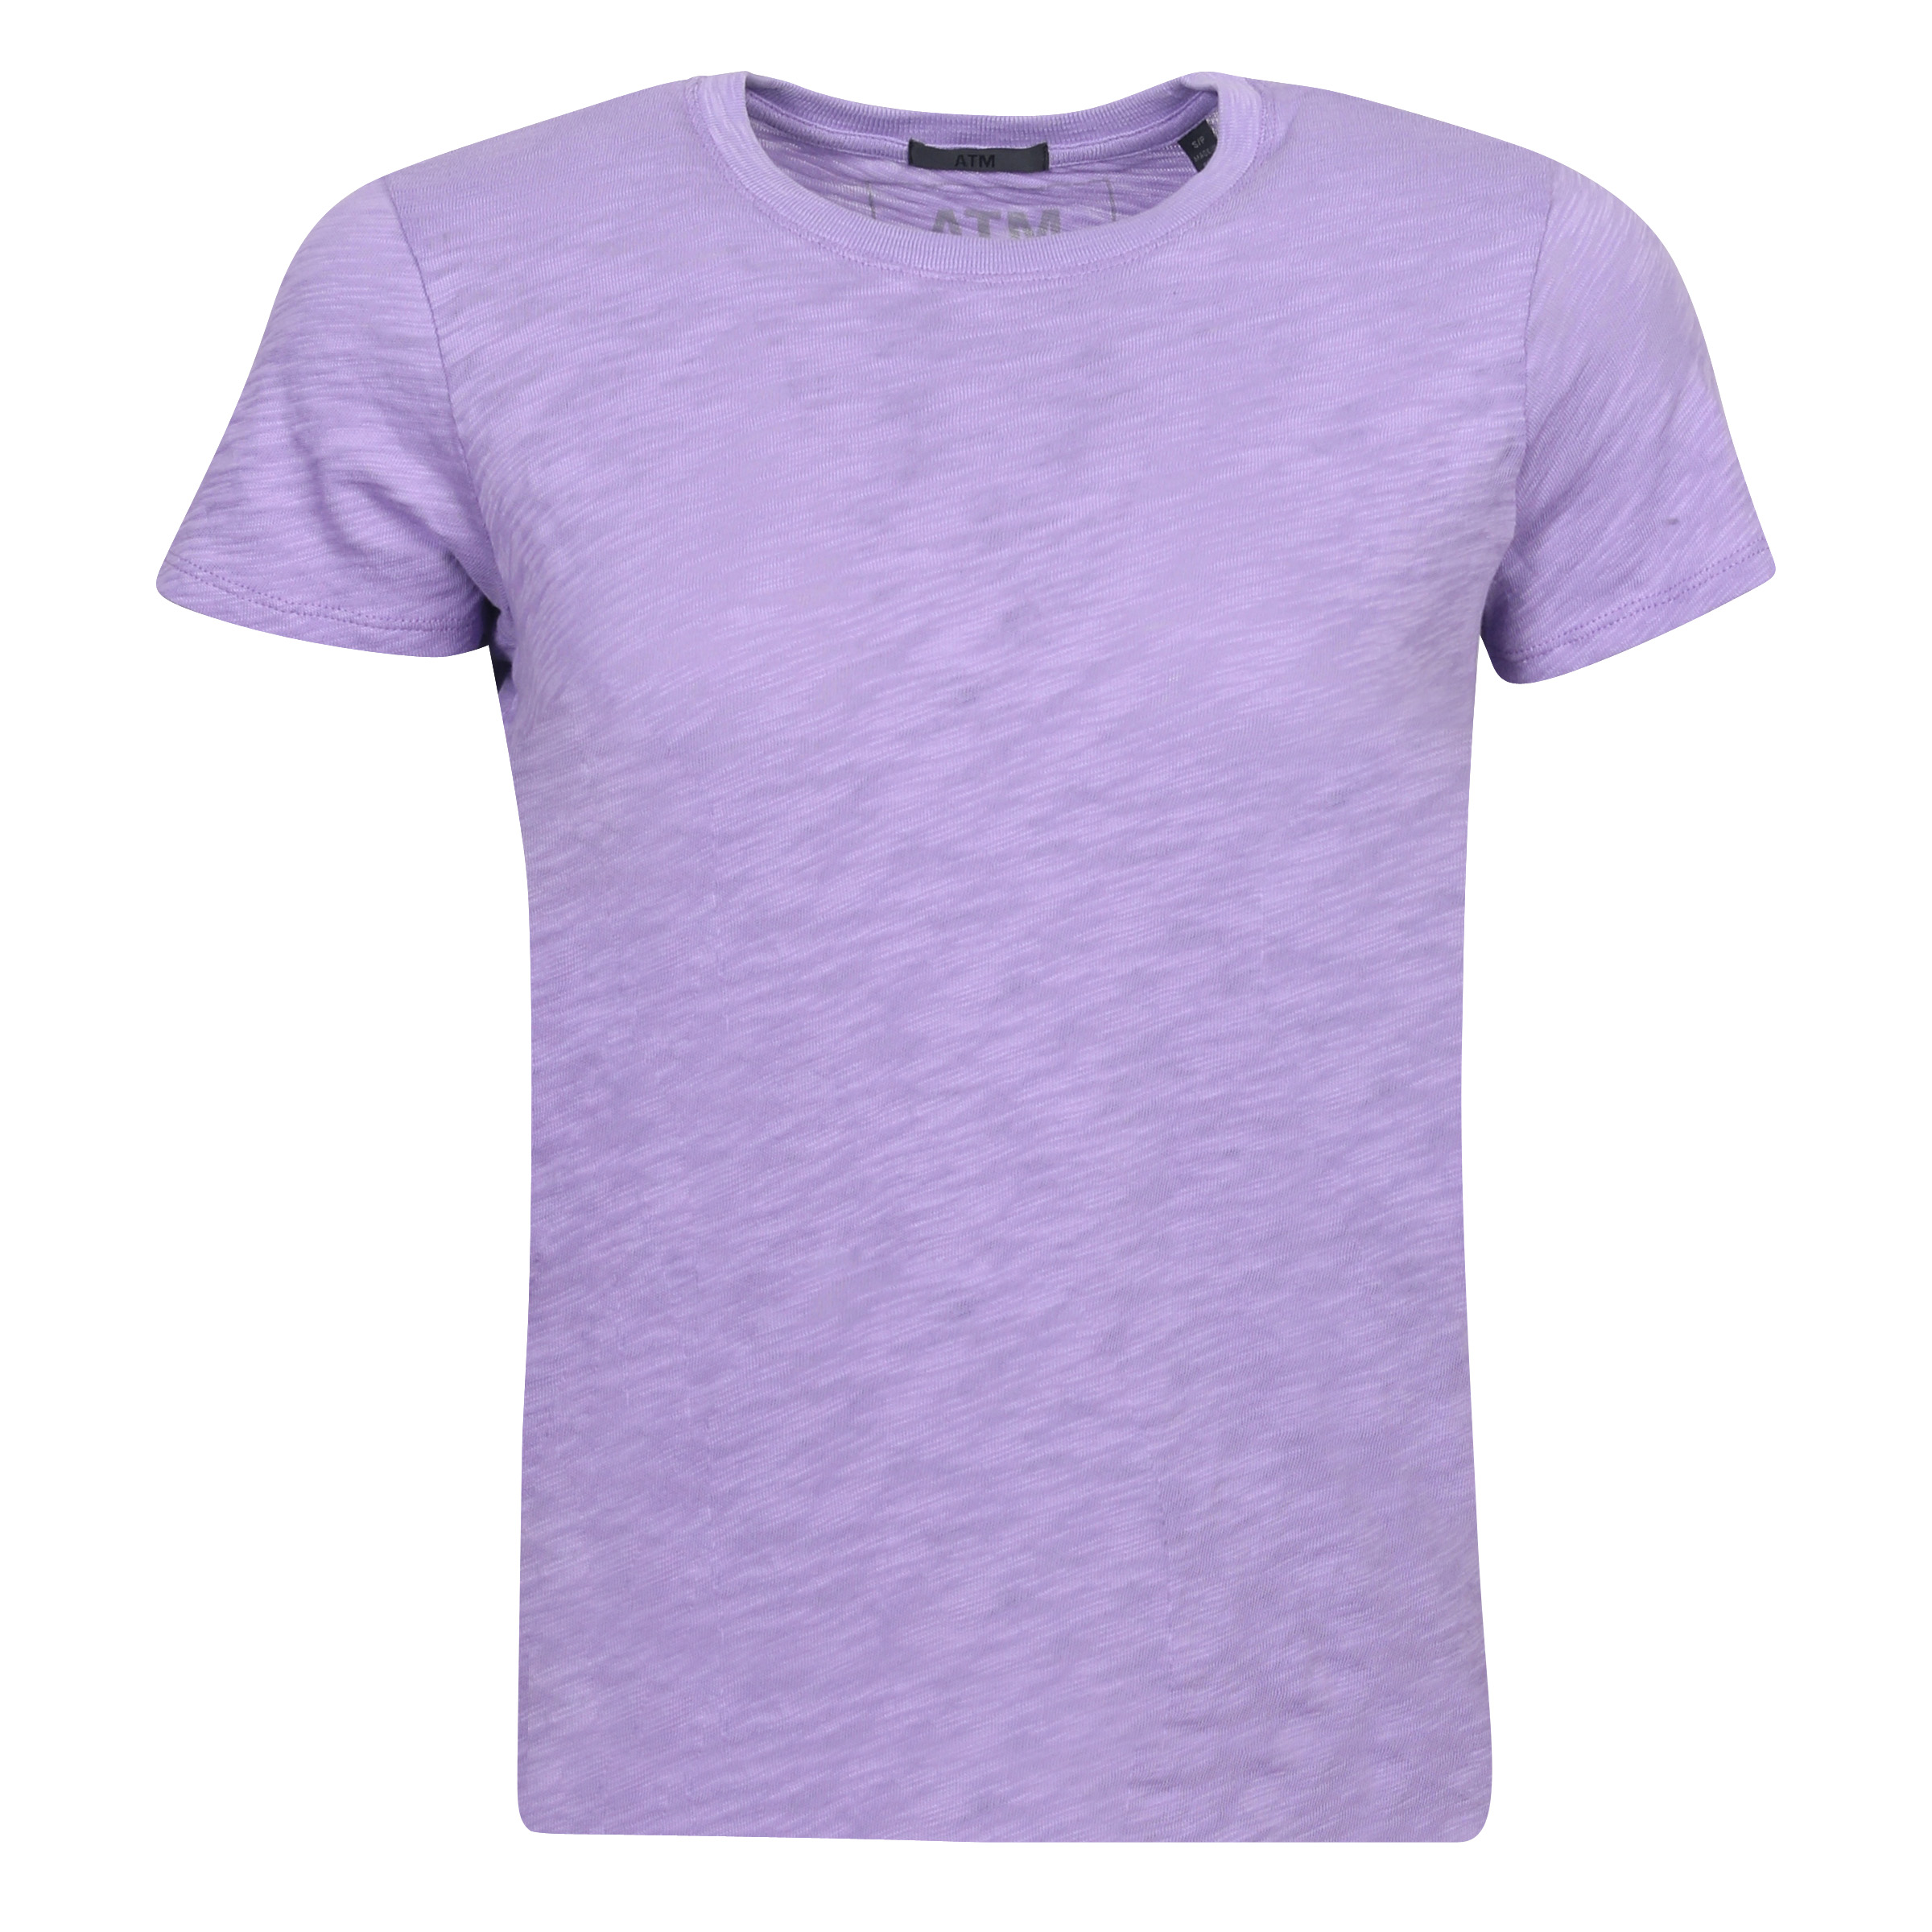 ATM Slub Jersey T-Shirt Crewneck Lilac L